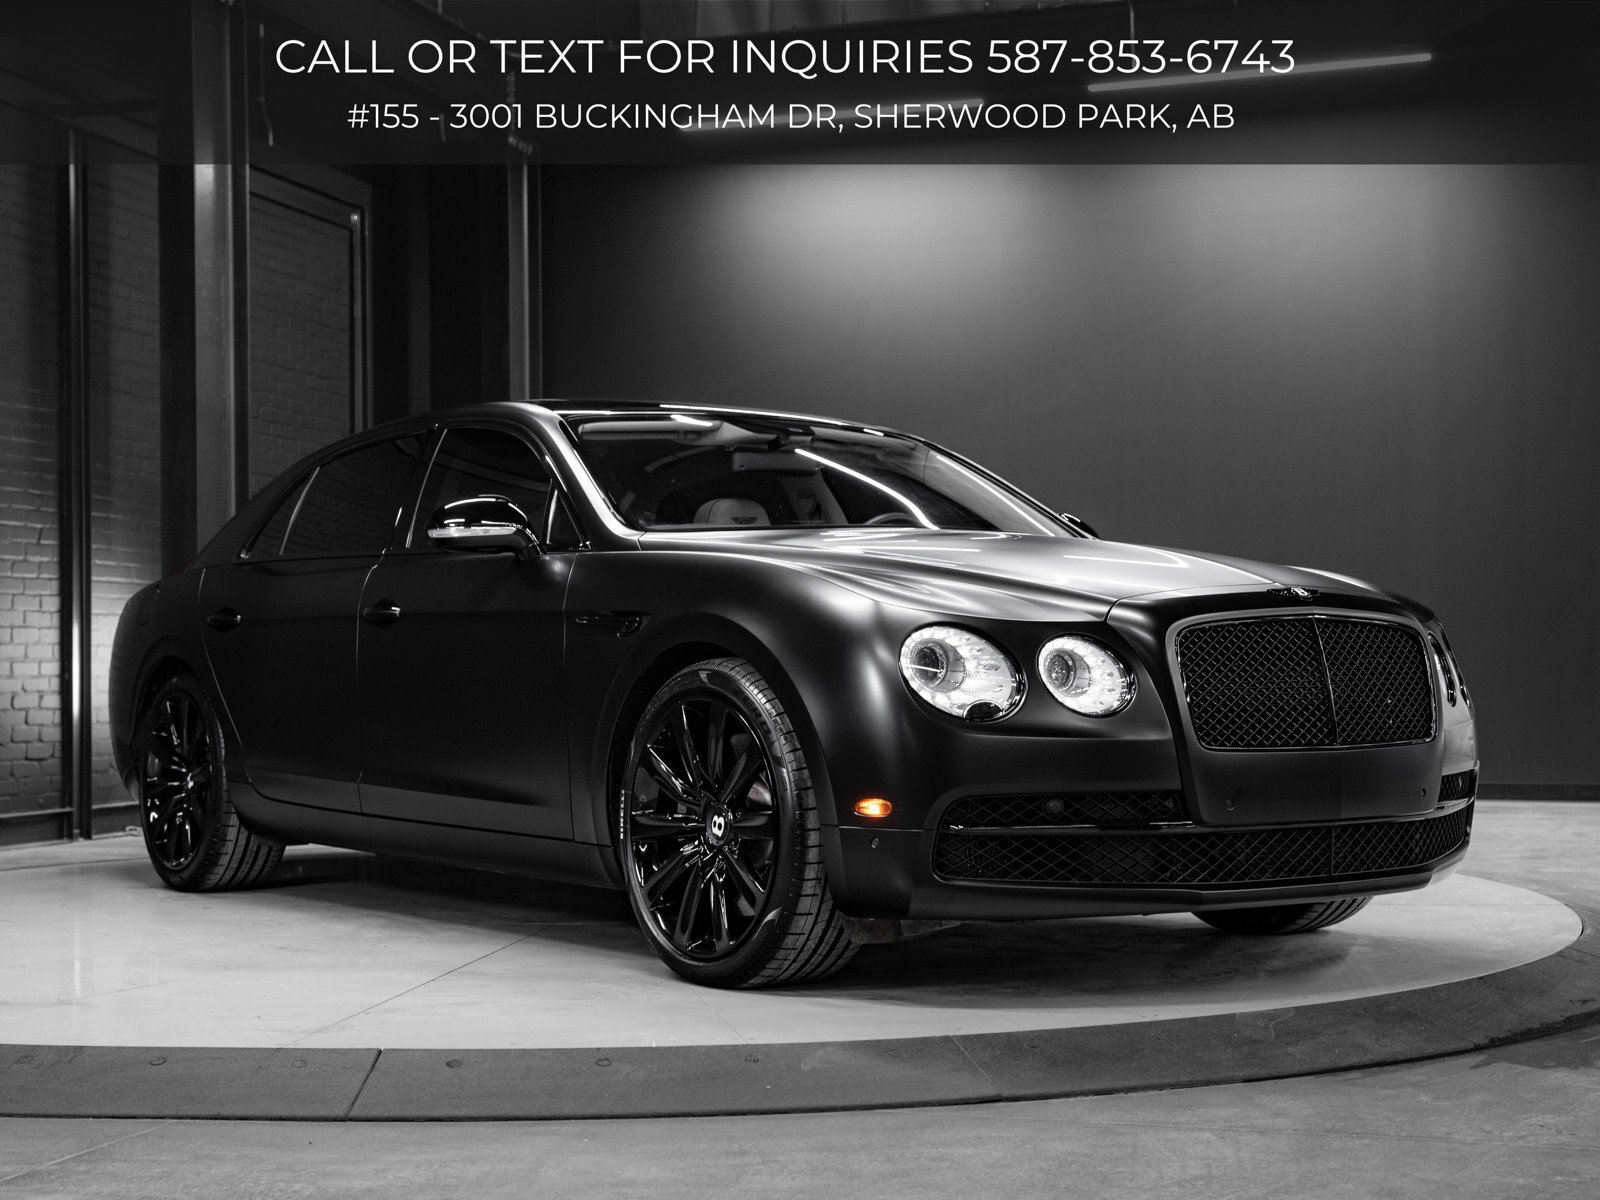 2014 Bentley Flying Spur | 3M Satin Black Wrap  | New Tires | W12